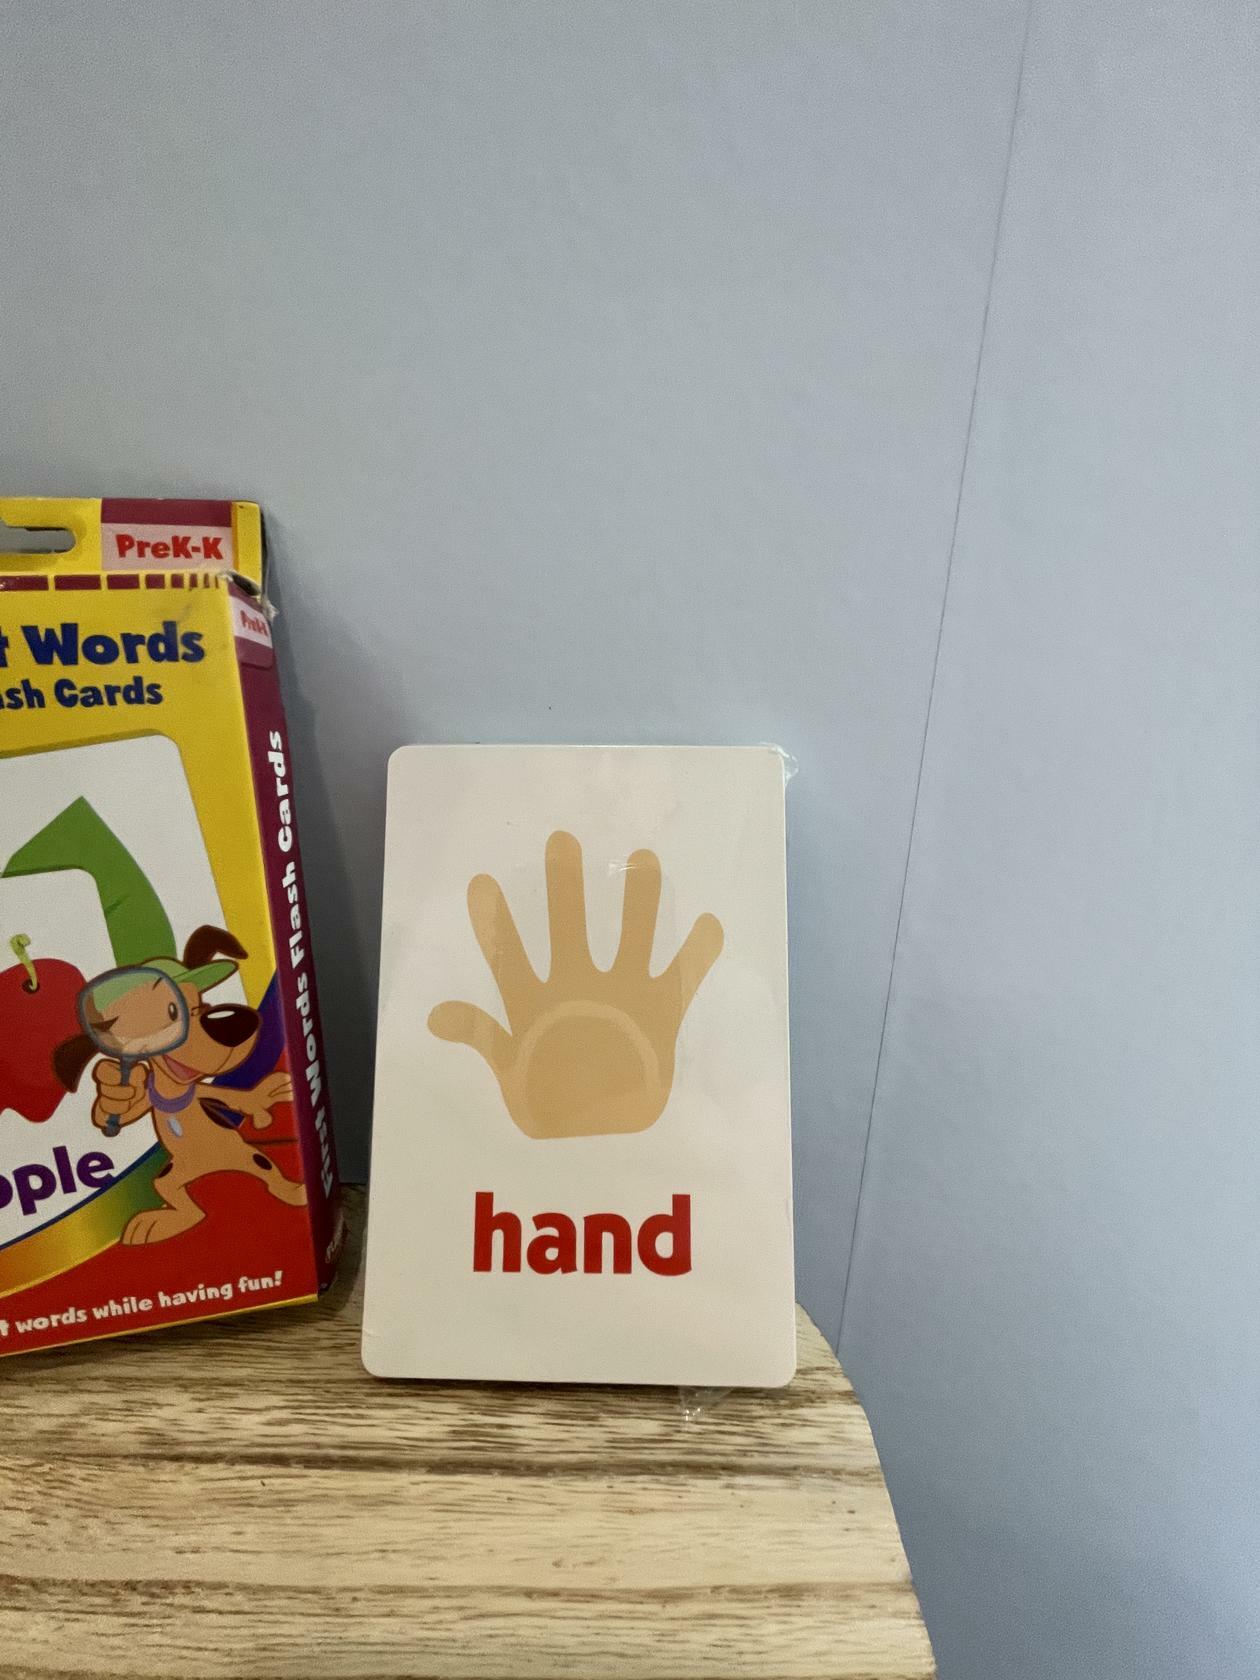 Playskool First Words 36 Flash Cards - Language toddler, children - Very Good